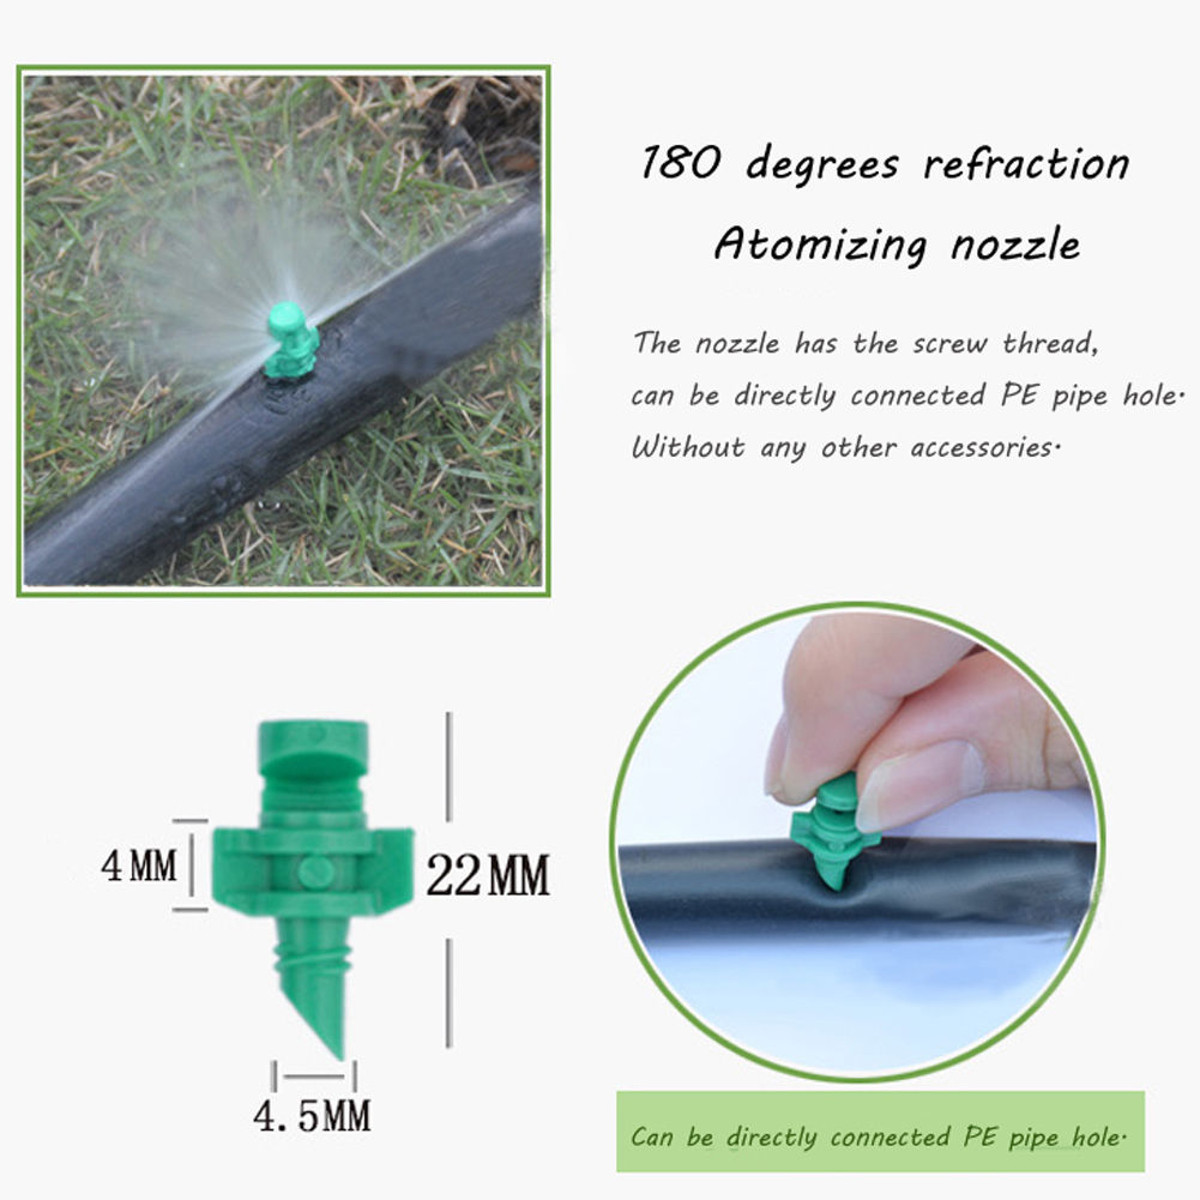 50pcs Mini Garden Lawn Water Spray Misting Nozzle Sprinkler Irrigation SystemSet